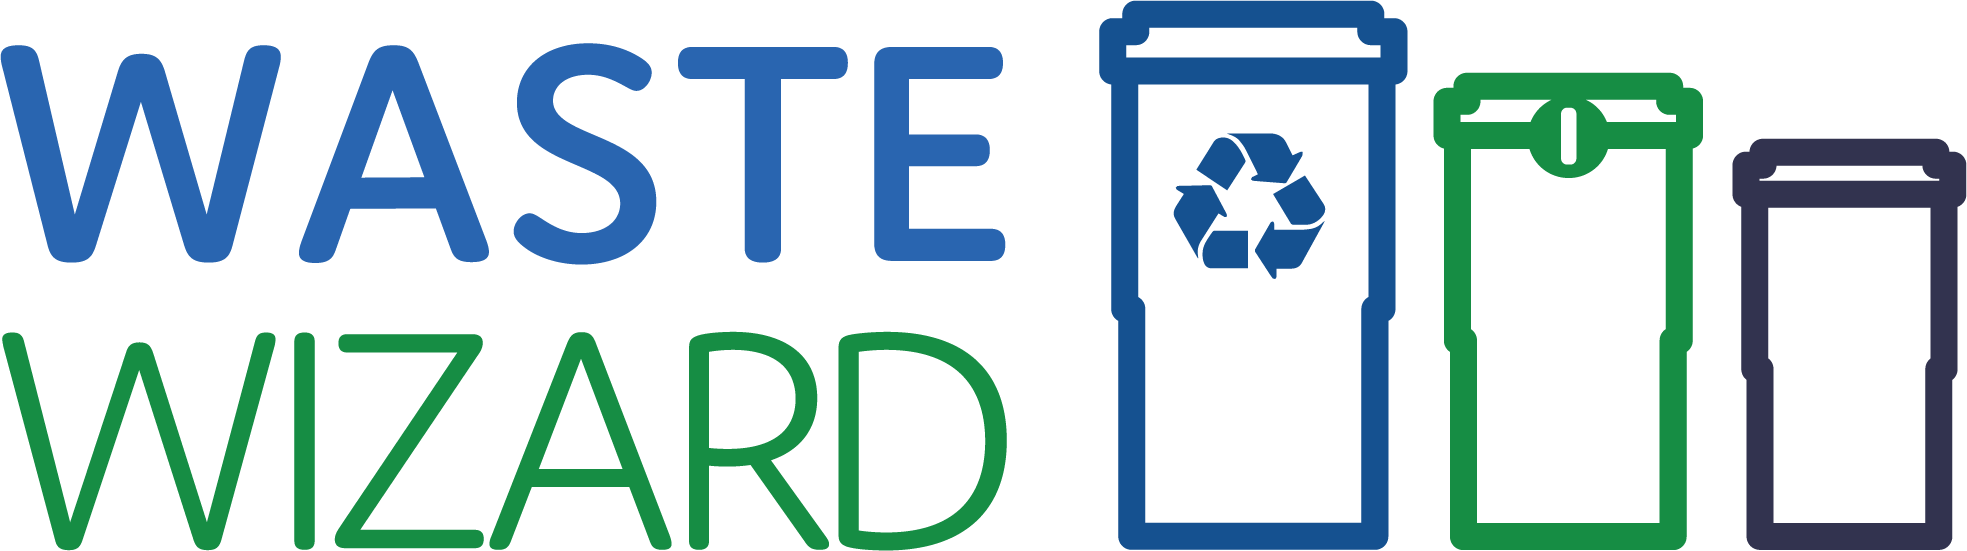 Backslash and Blue Box Logo - Waste Wizard